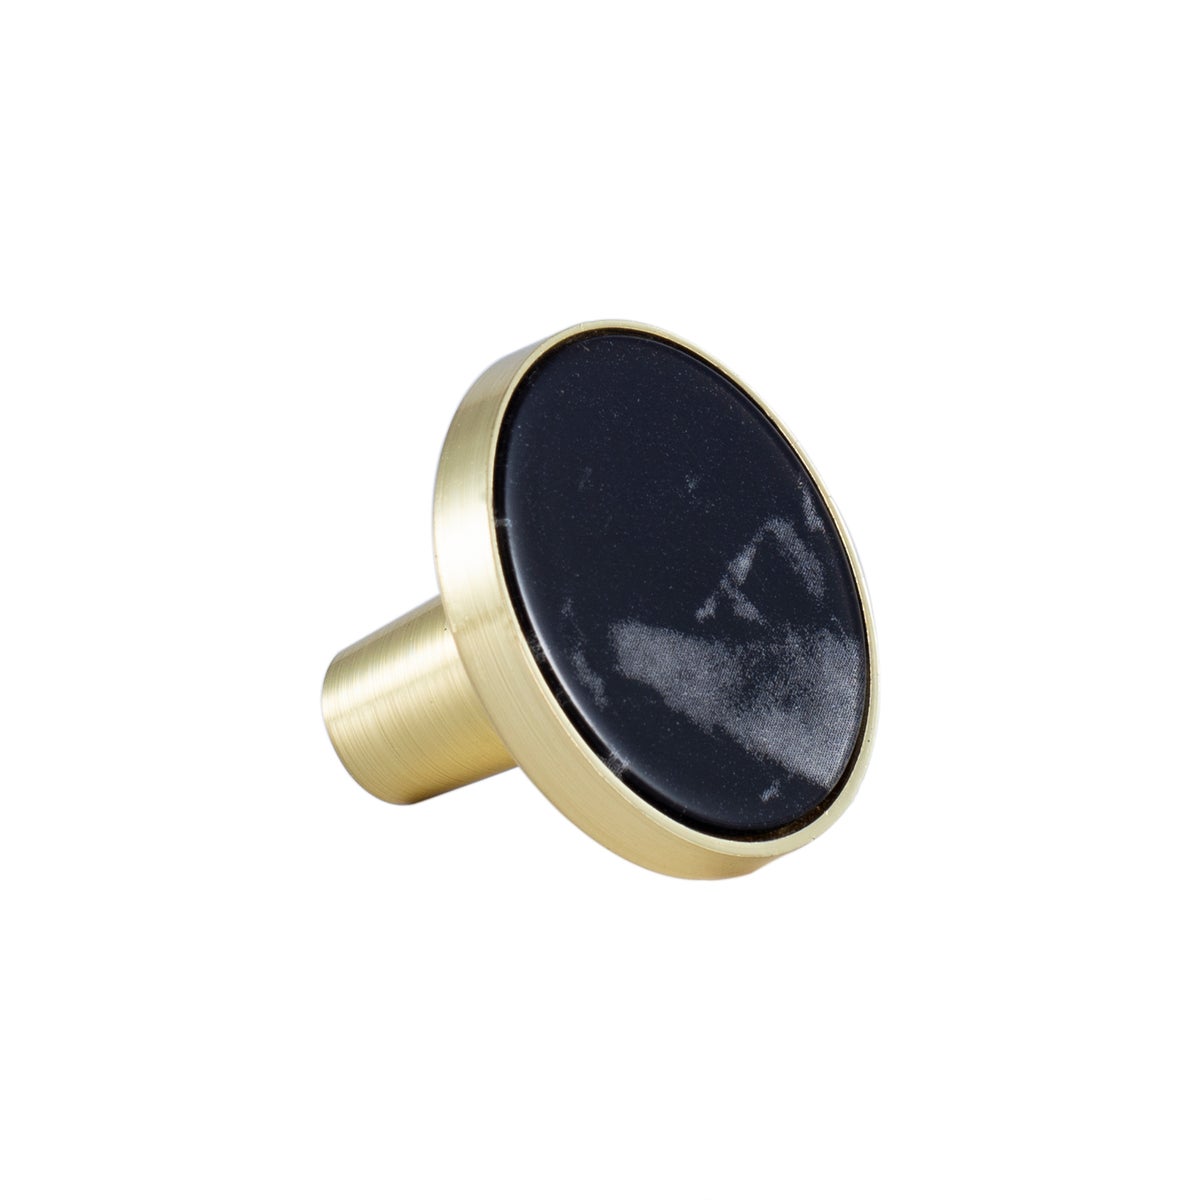 6PC - 30MM Black Calcutta Stone Knob Pull Handles w/ Brushed Gold Finish (12 Set)